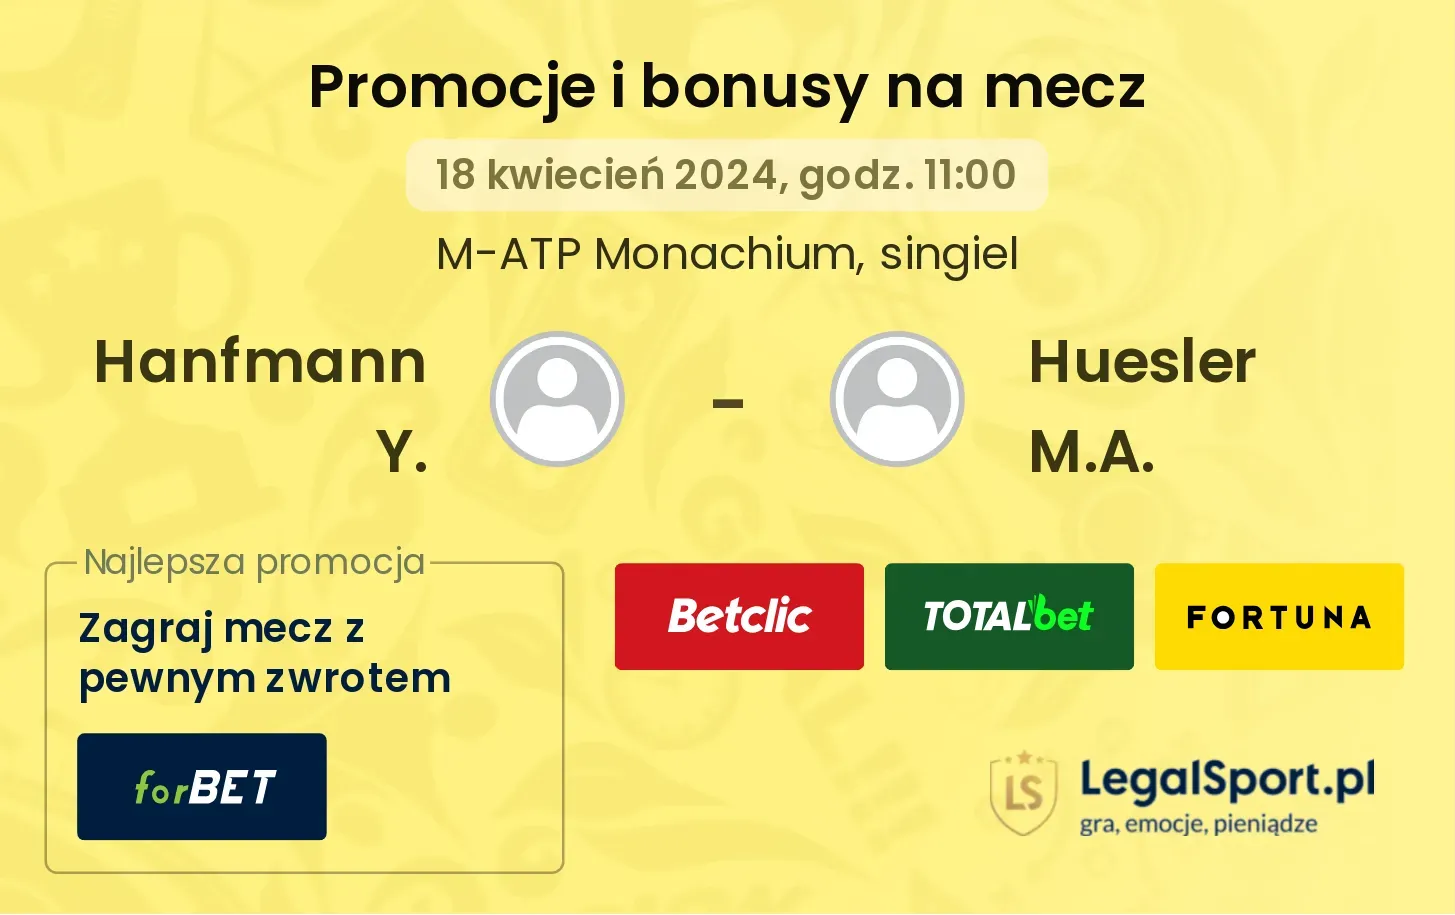 Hanfmann Y. - Huesler M.A. promocje bonusy na mecz